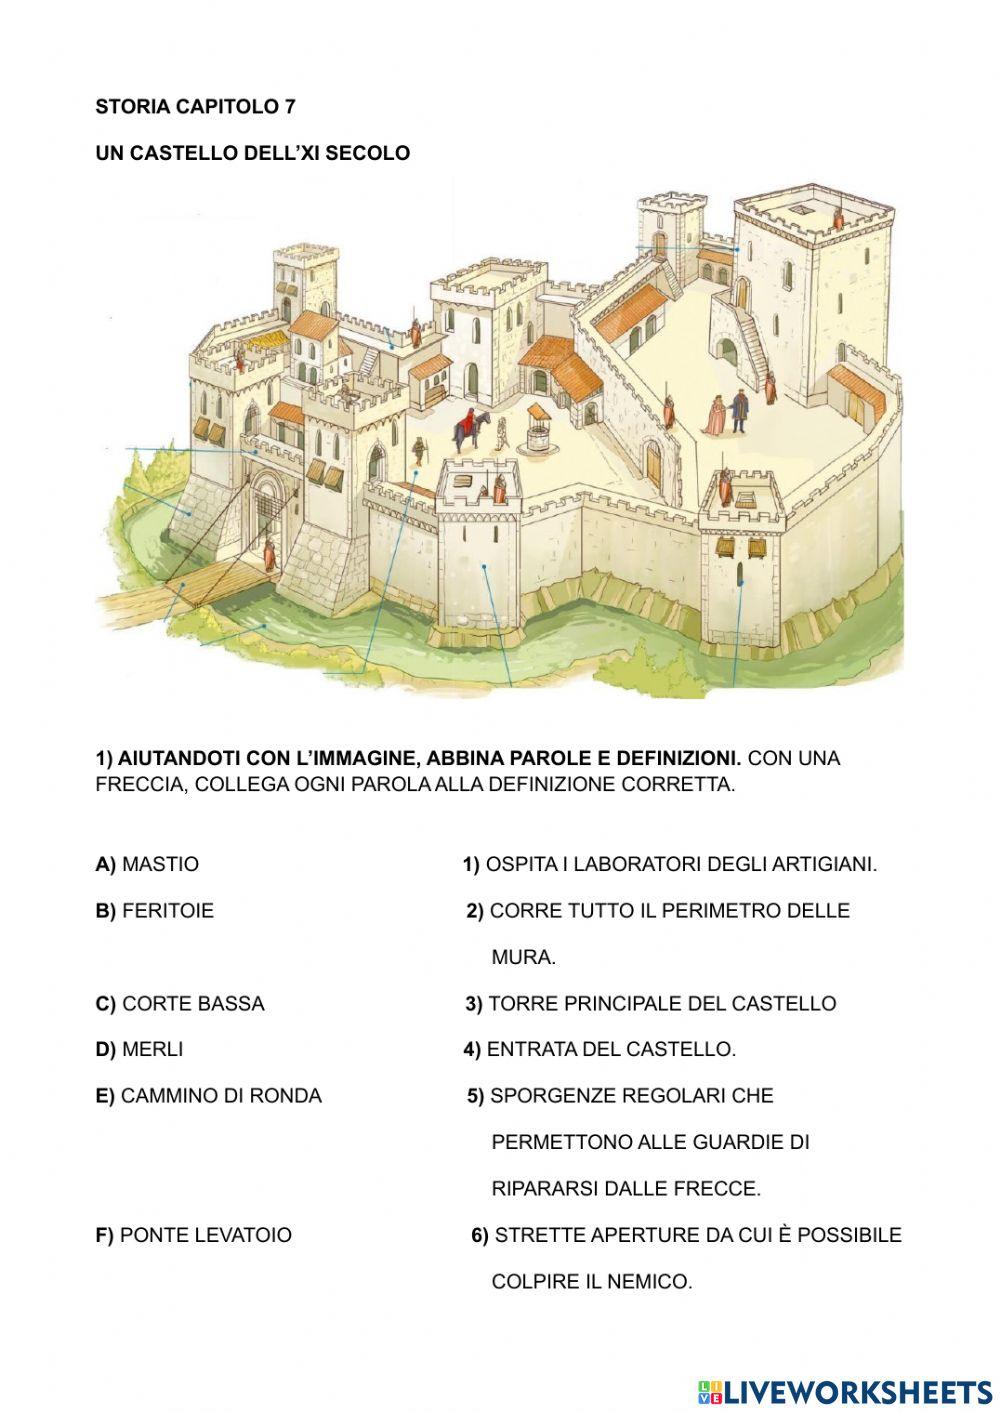 Storia - Europa XI sec., castello